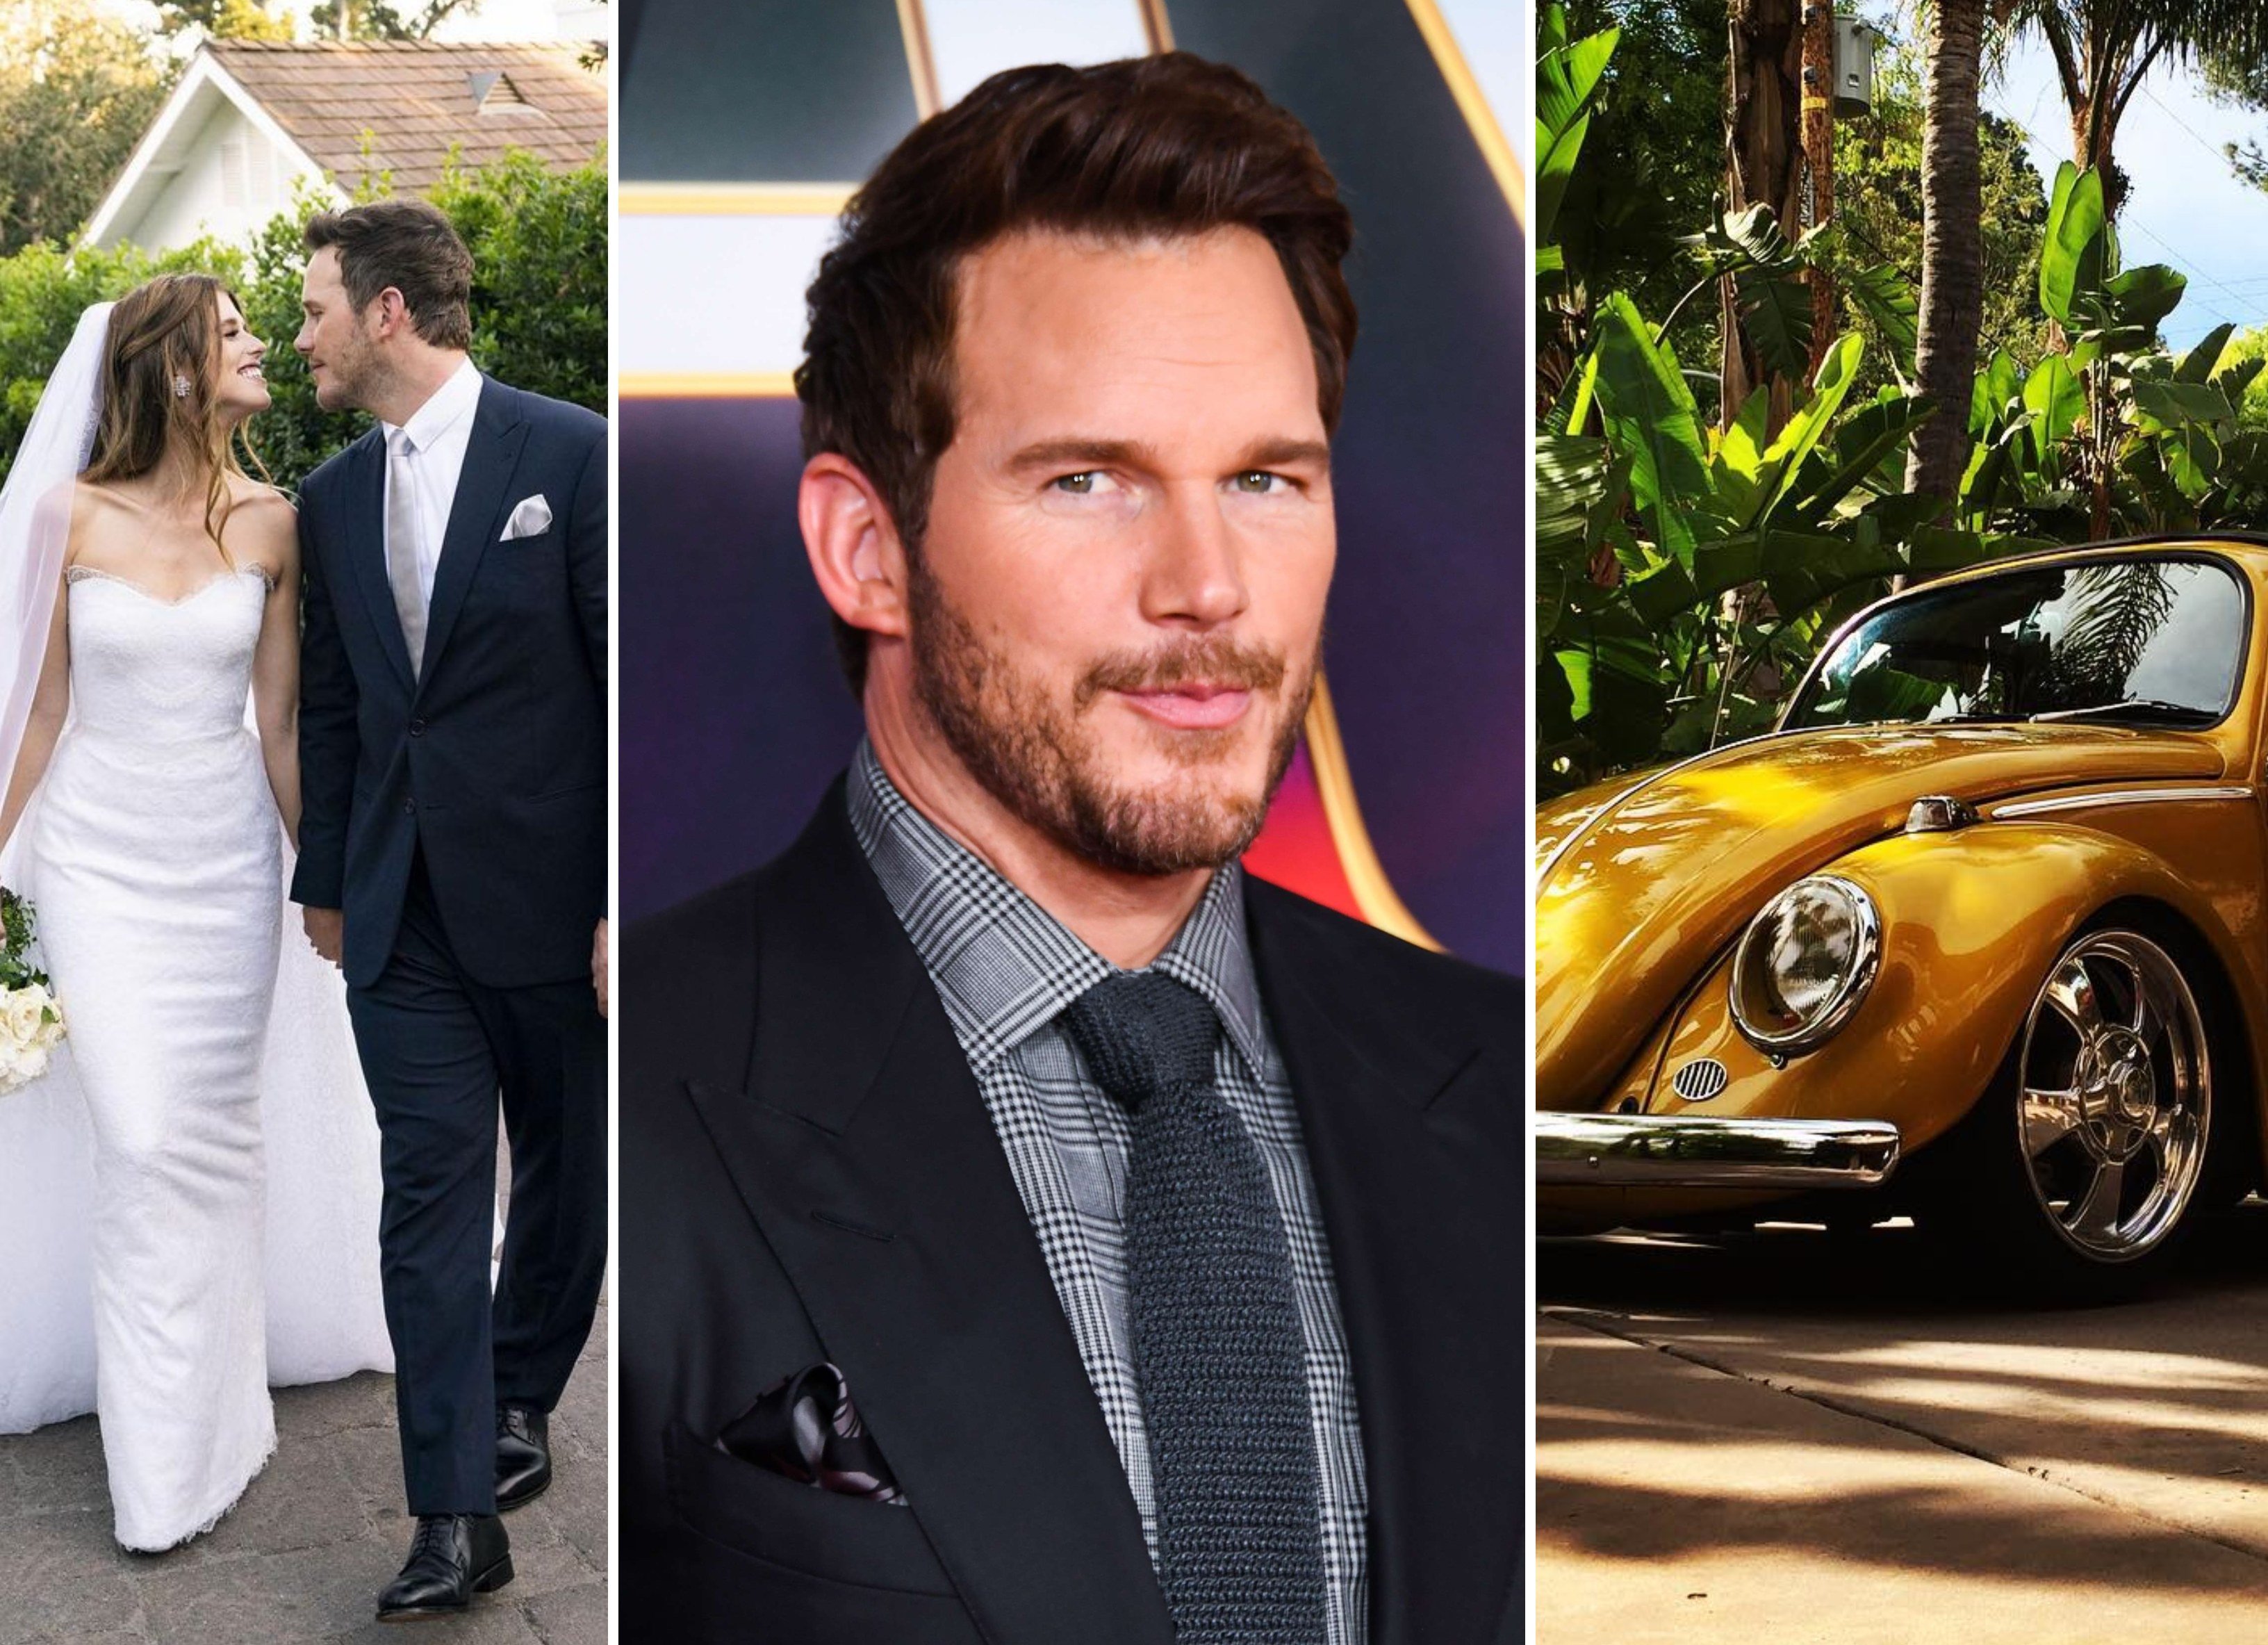 Chris Pratt has earned millions during his time in the limelight – and splurges on fancy cars and his engagement ring for Katherine Schwarzenegger (left). Photos: @prattprattpratt/Instagram; AFP